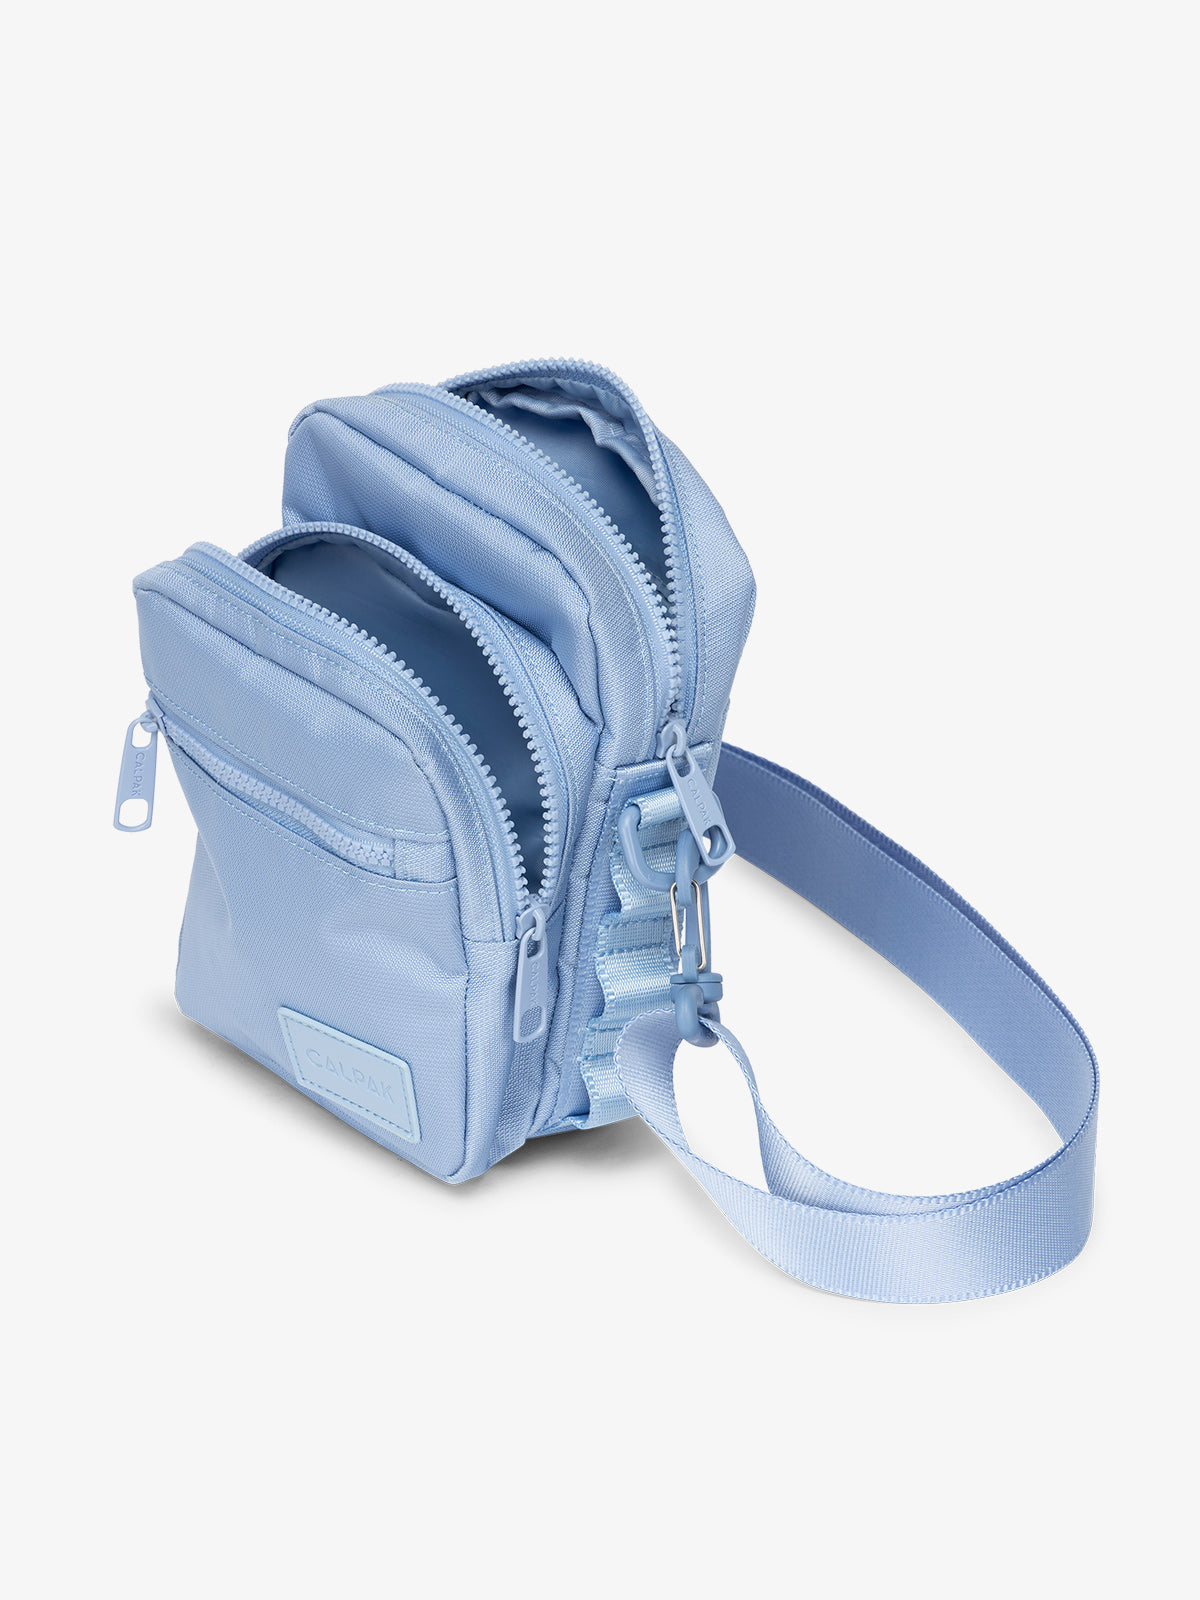 Baby blue CALPAK Stevyn Mini Crossbody Bag with adjustable shoulder strap, zippered pockets, and interior zipper pocket